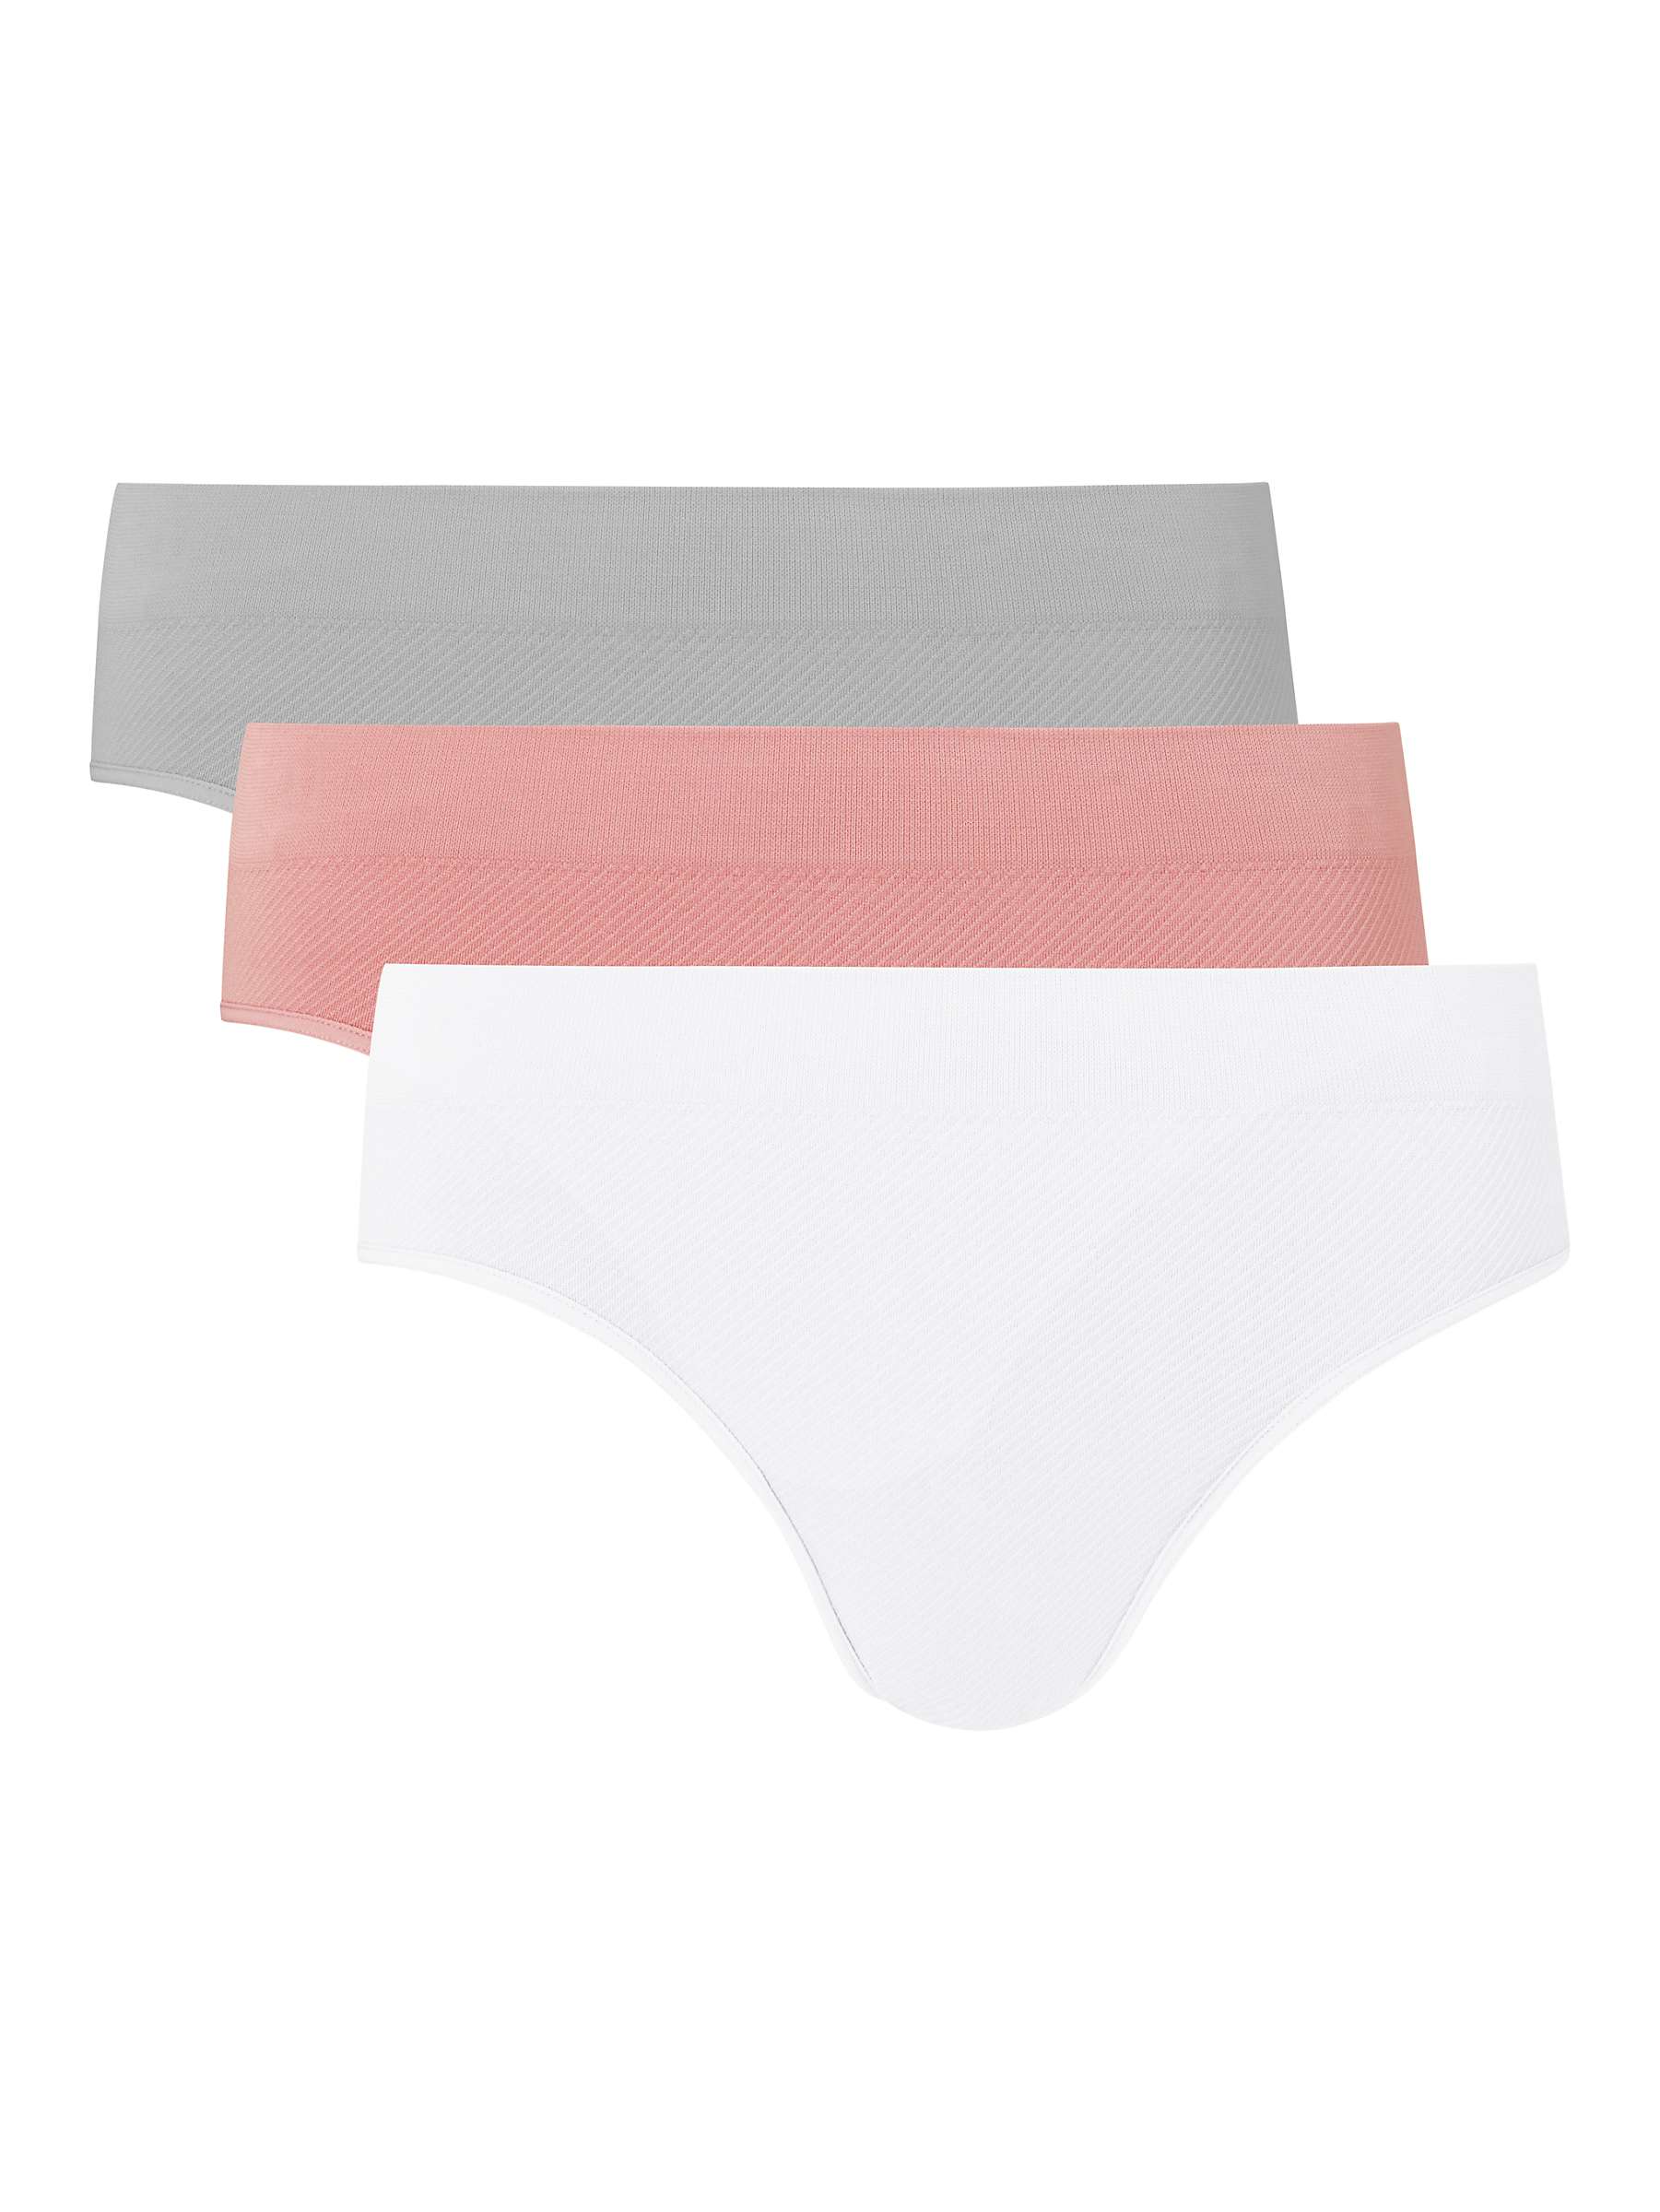 Buy John Lewis Seam Free Ribbed Bikini Knickers, Pack of 3, Pink/White/Grey Online at johnlewis.com